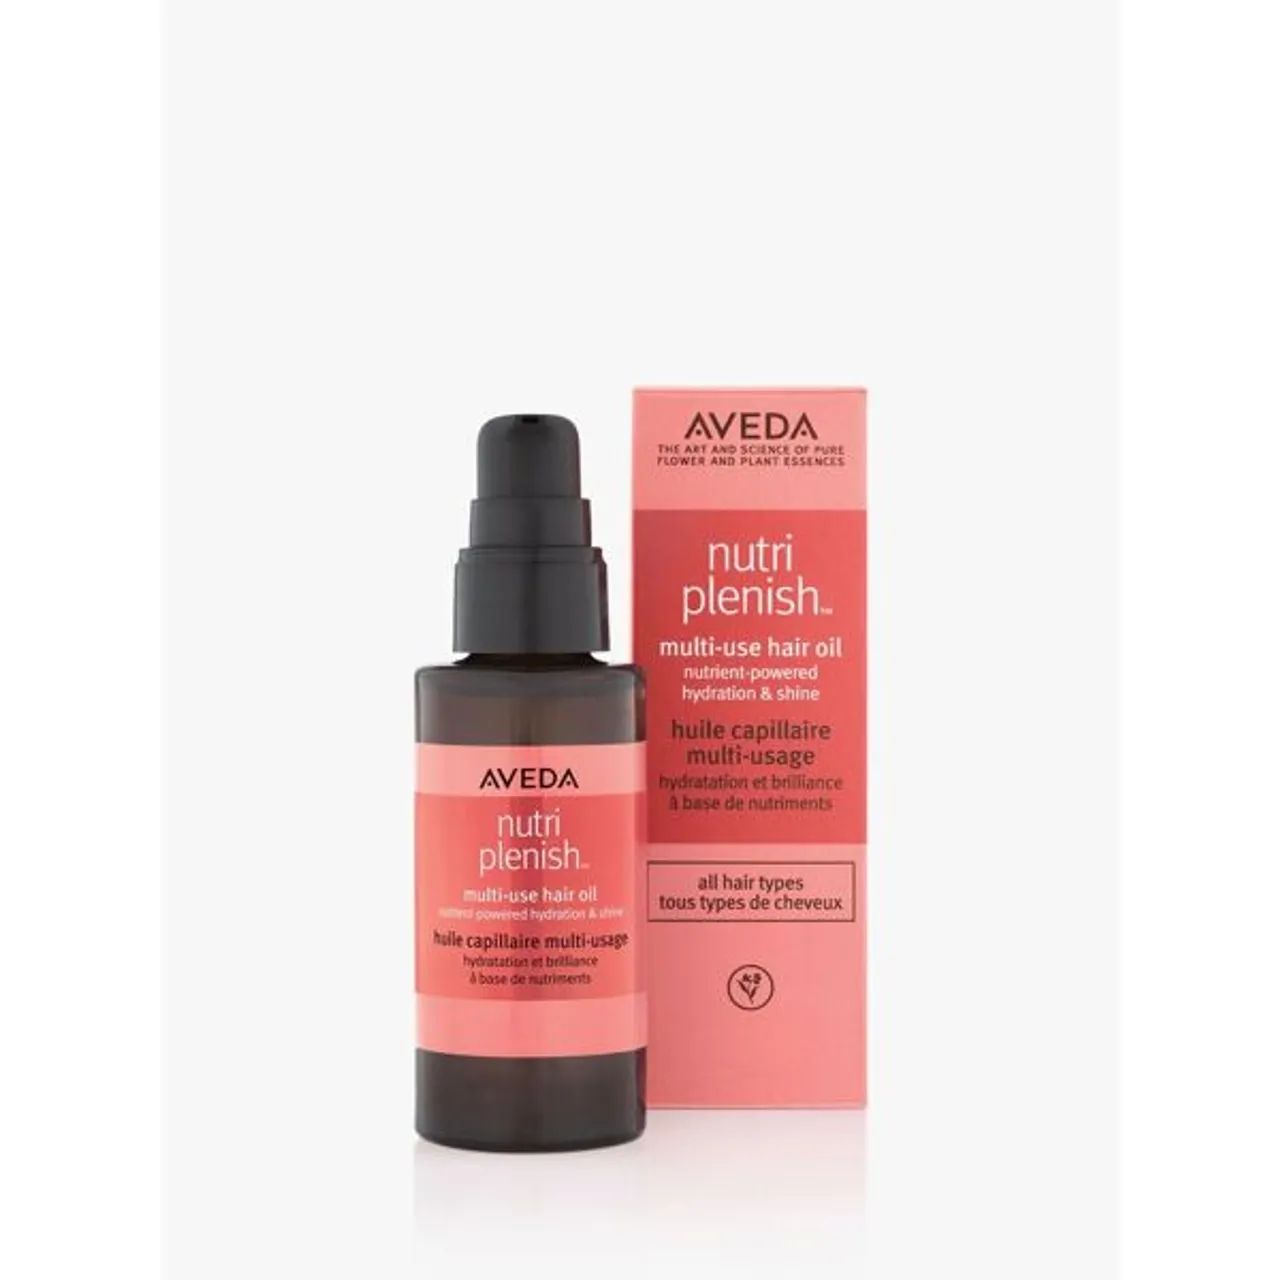 Aveda Nutri-Plenish Multi-Use Hair Oil, 30ml - Unisex - Size: 30ml